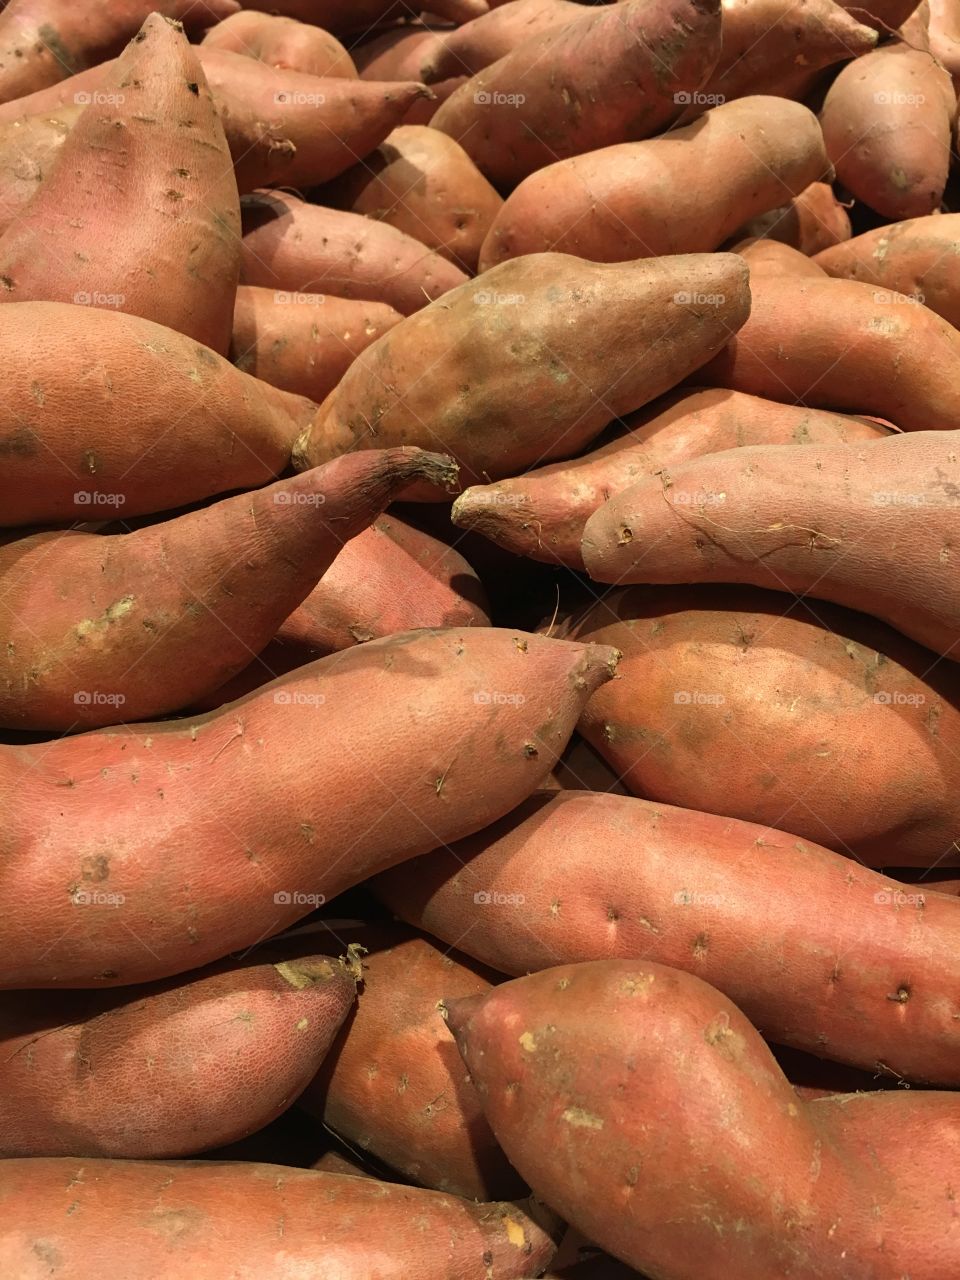 Sweet potatoes in a display bin